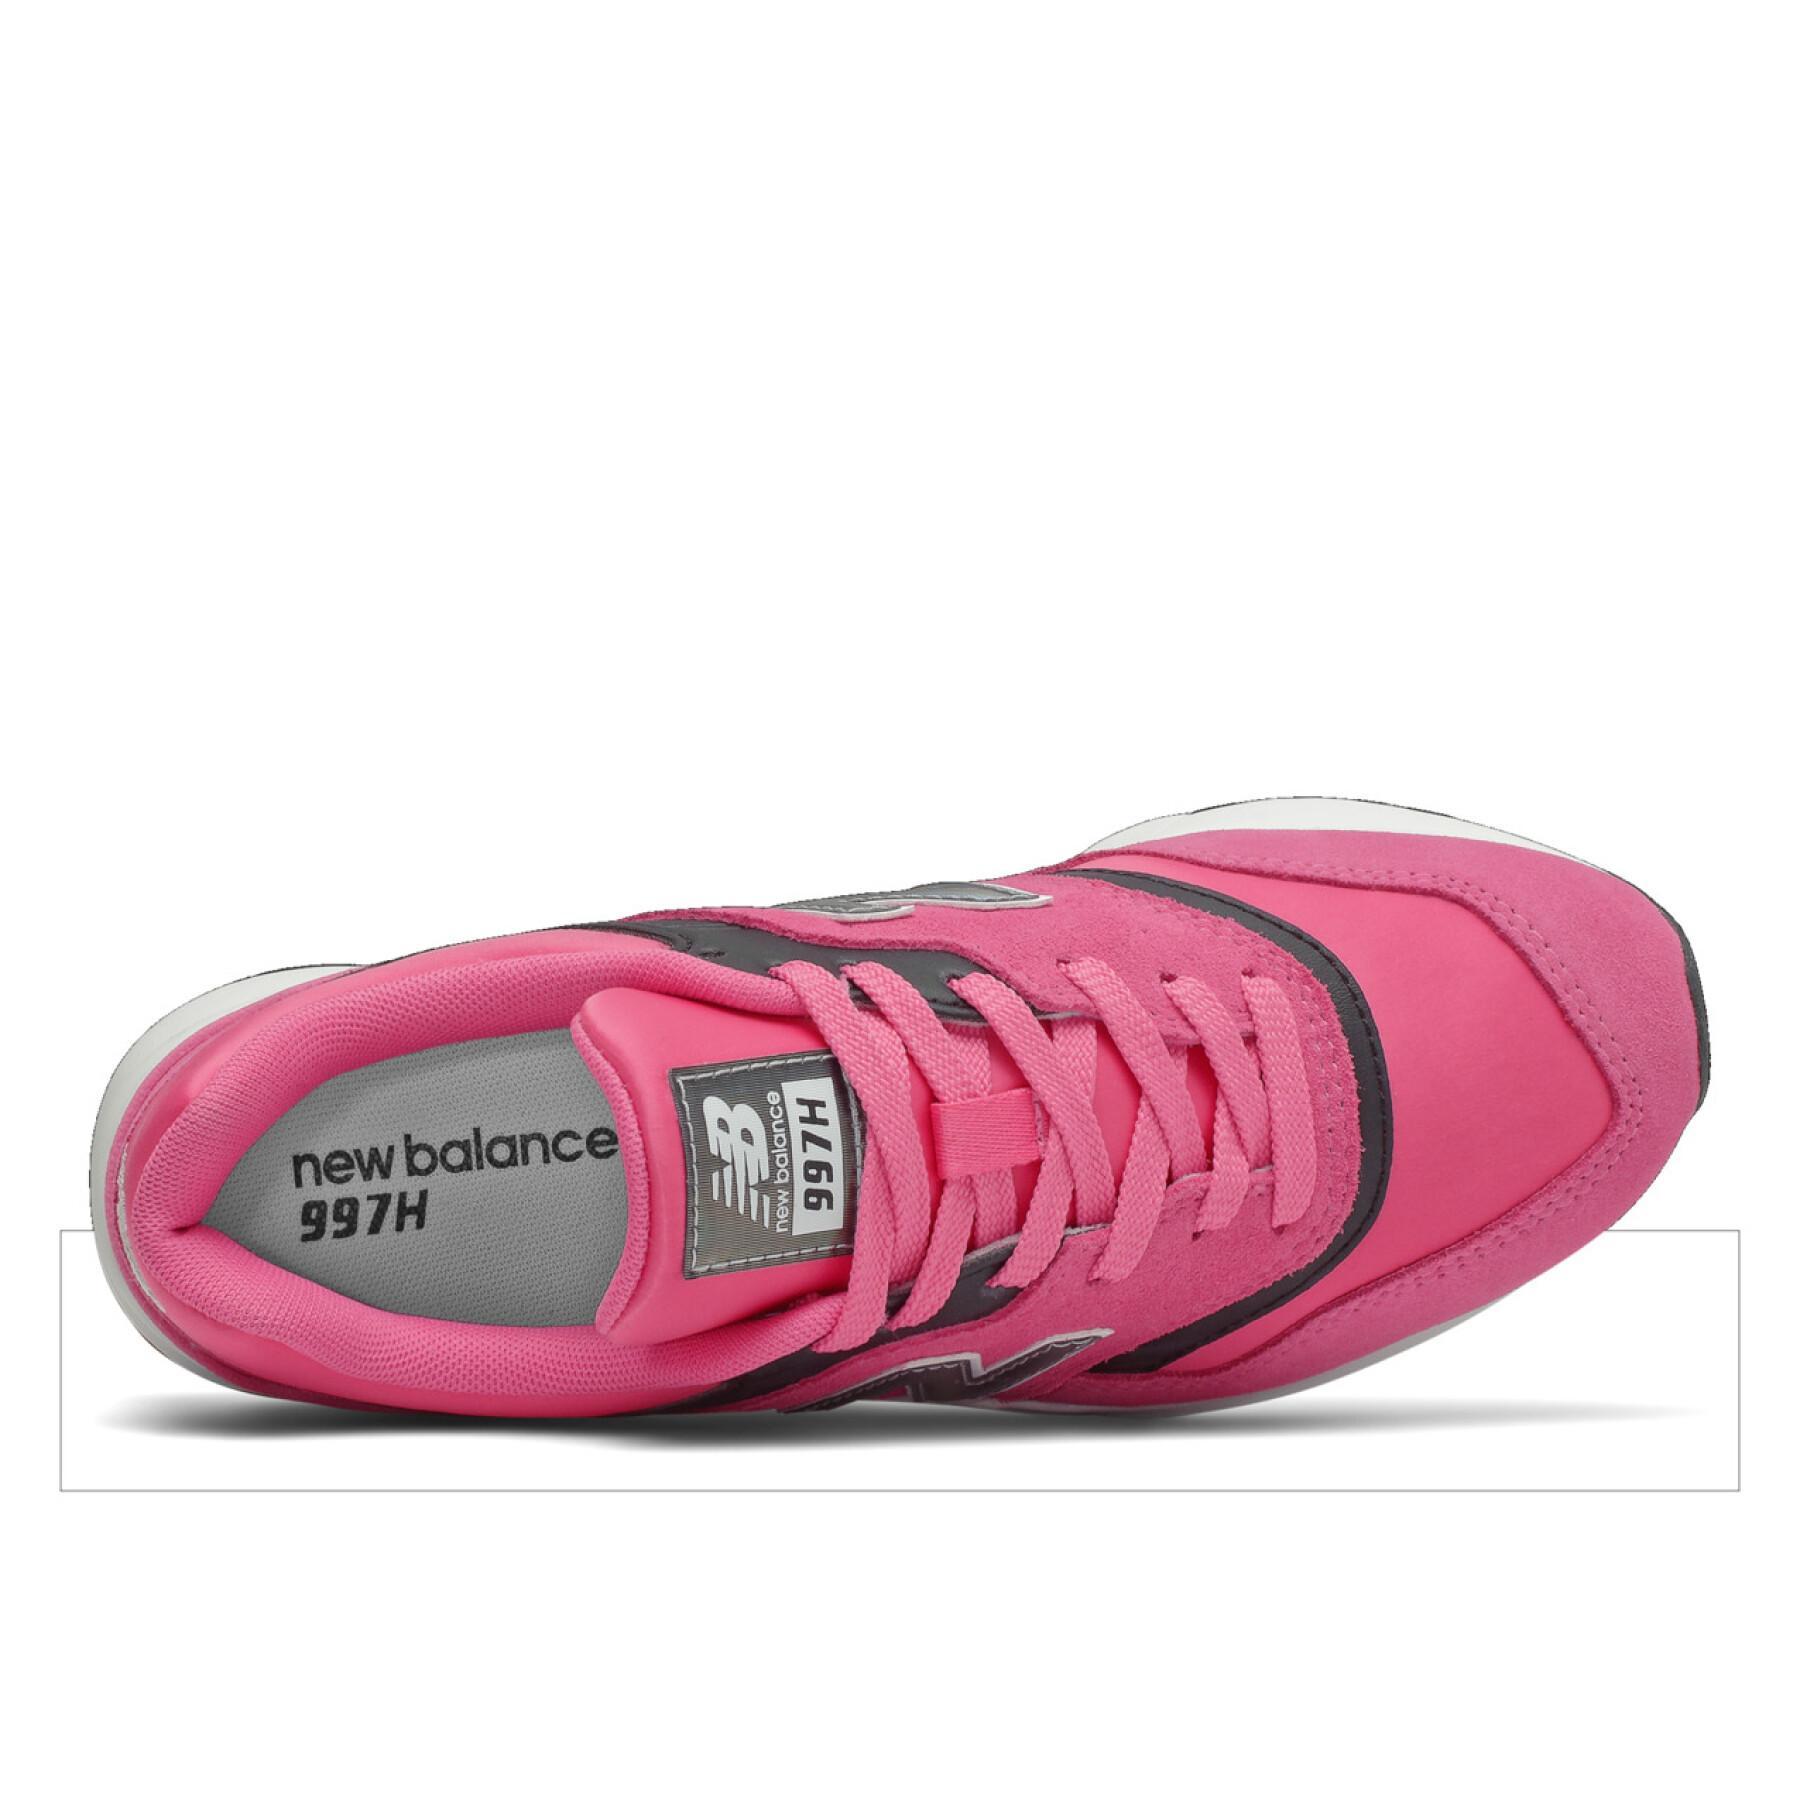 Zapatillas mujer New Balance cw997h v1